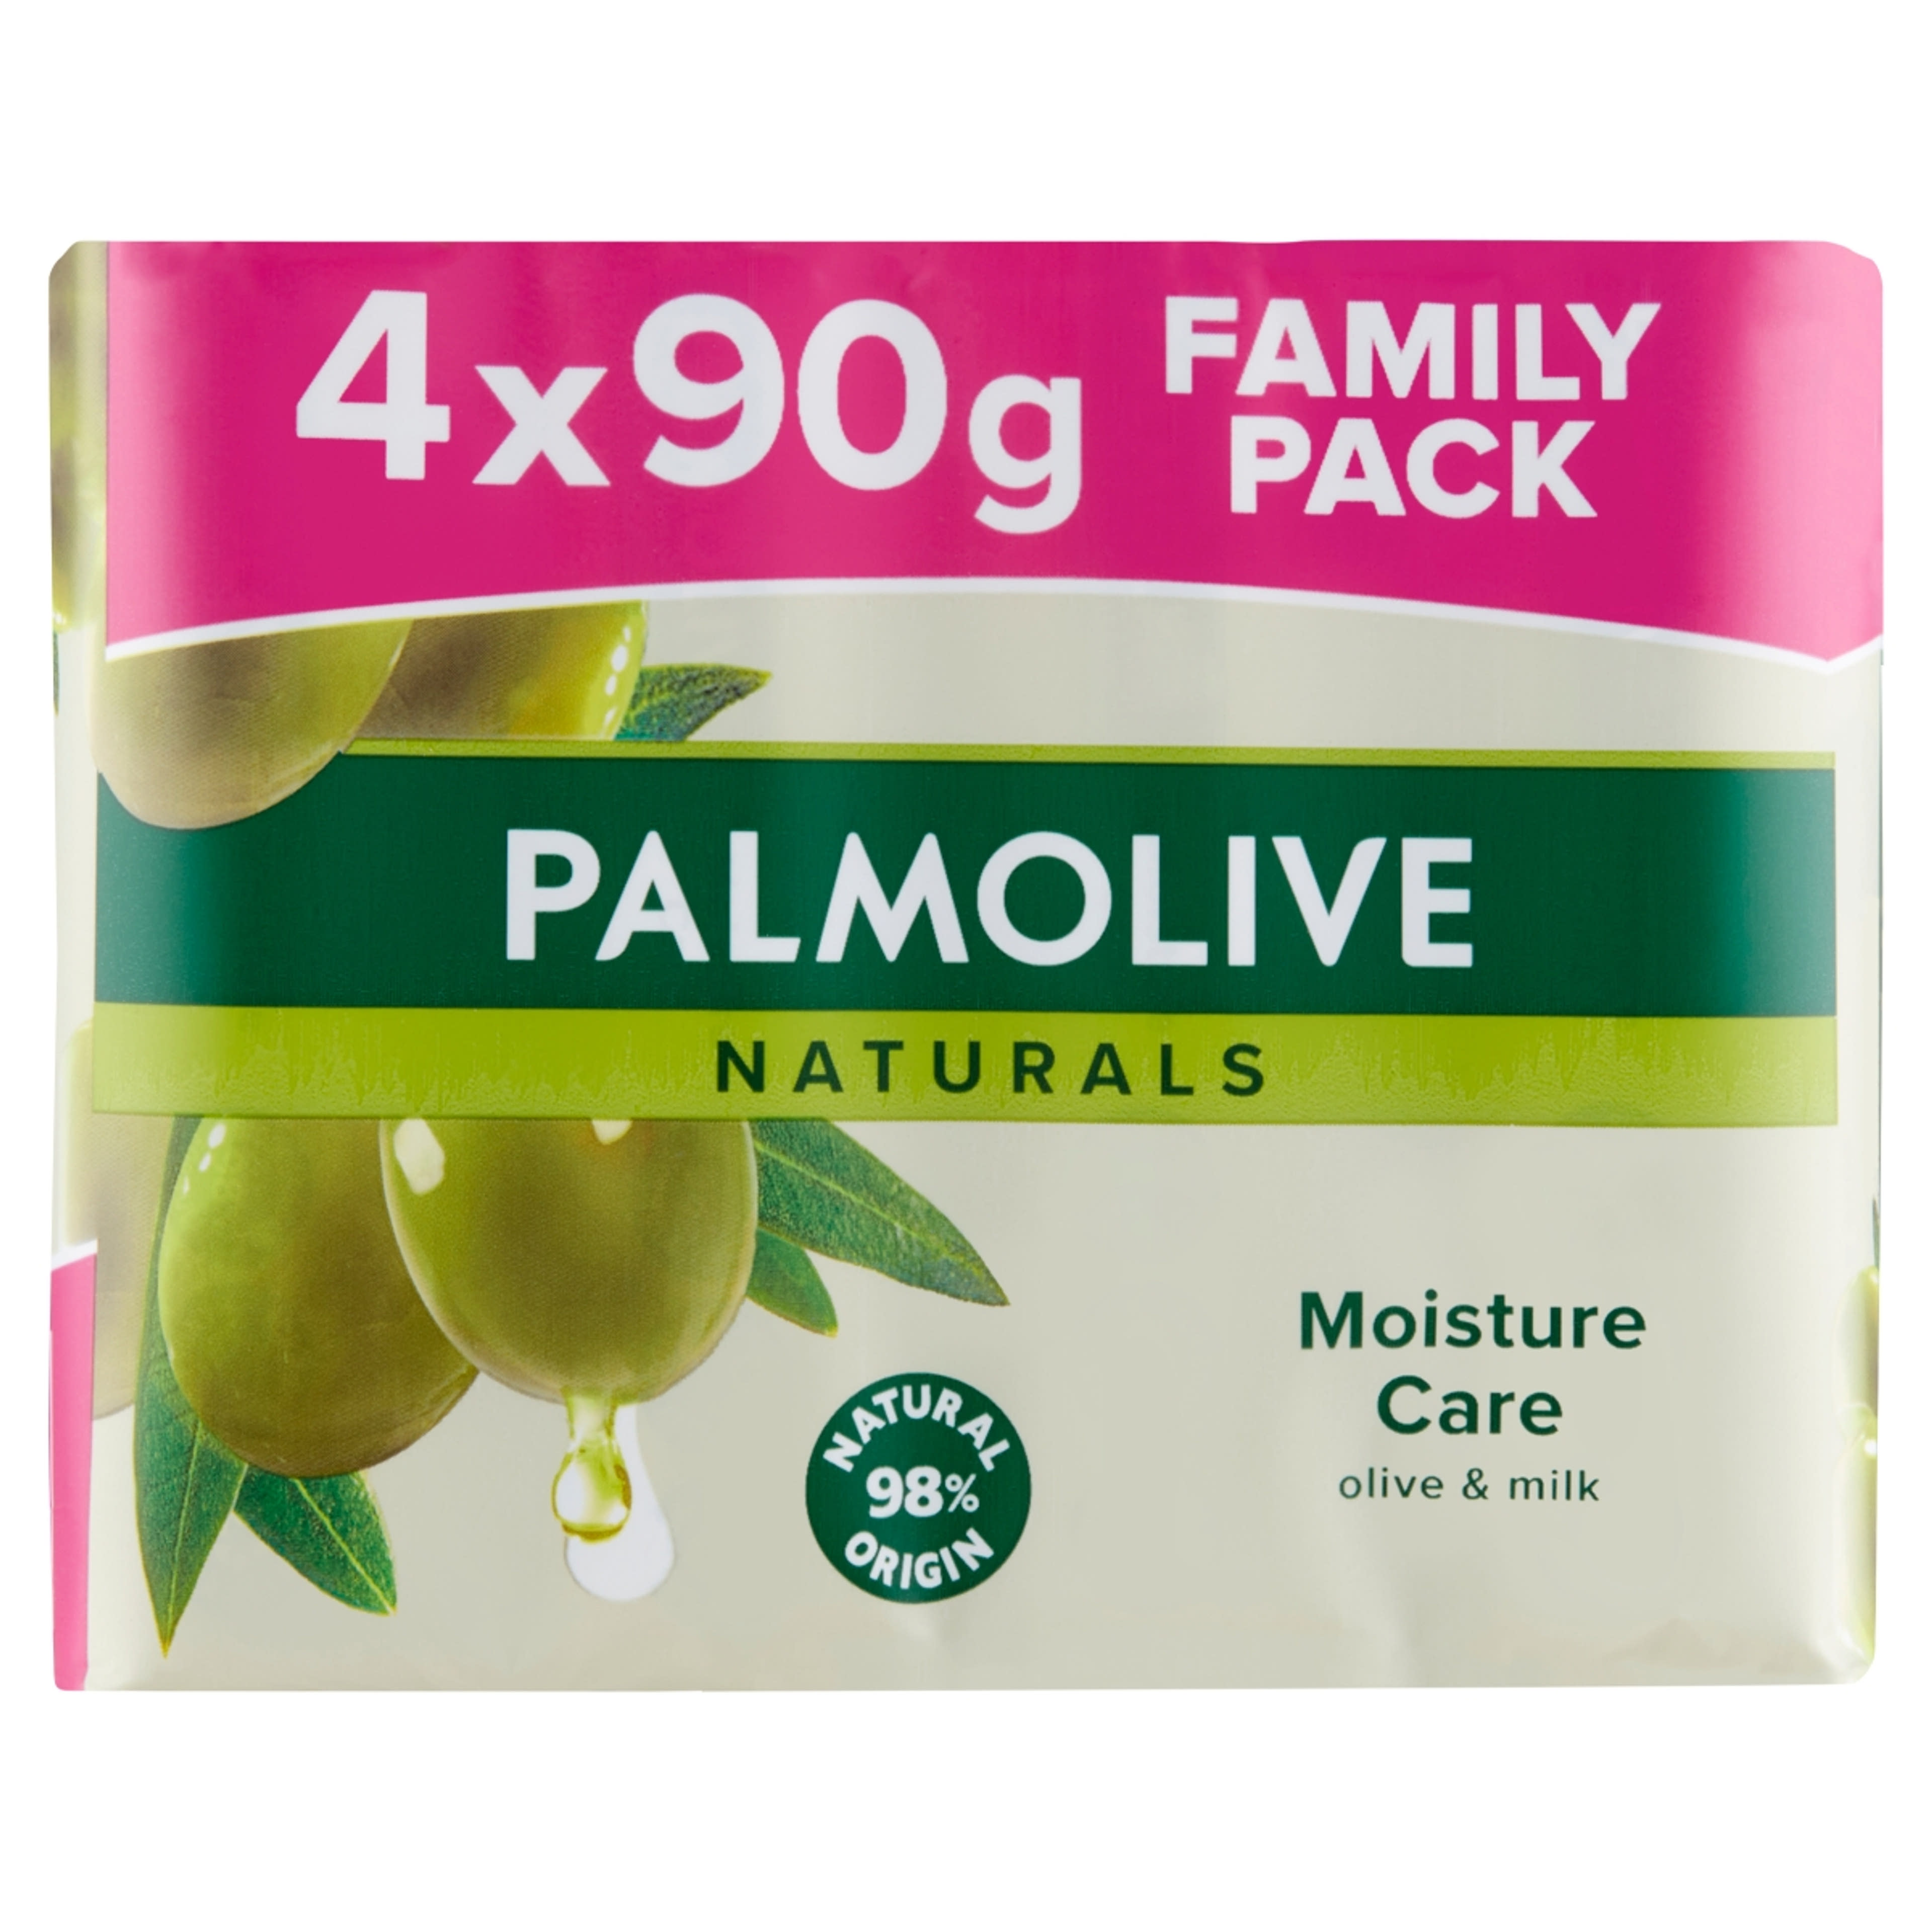 Palmolive Naturals Moisture Care pipereszappan olíva kivonattal - 4 x 90 g